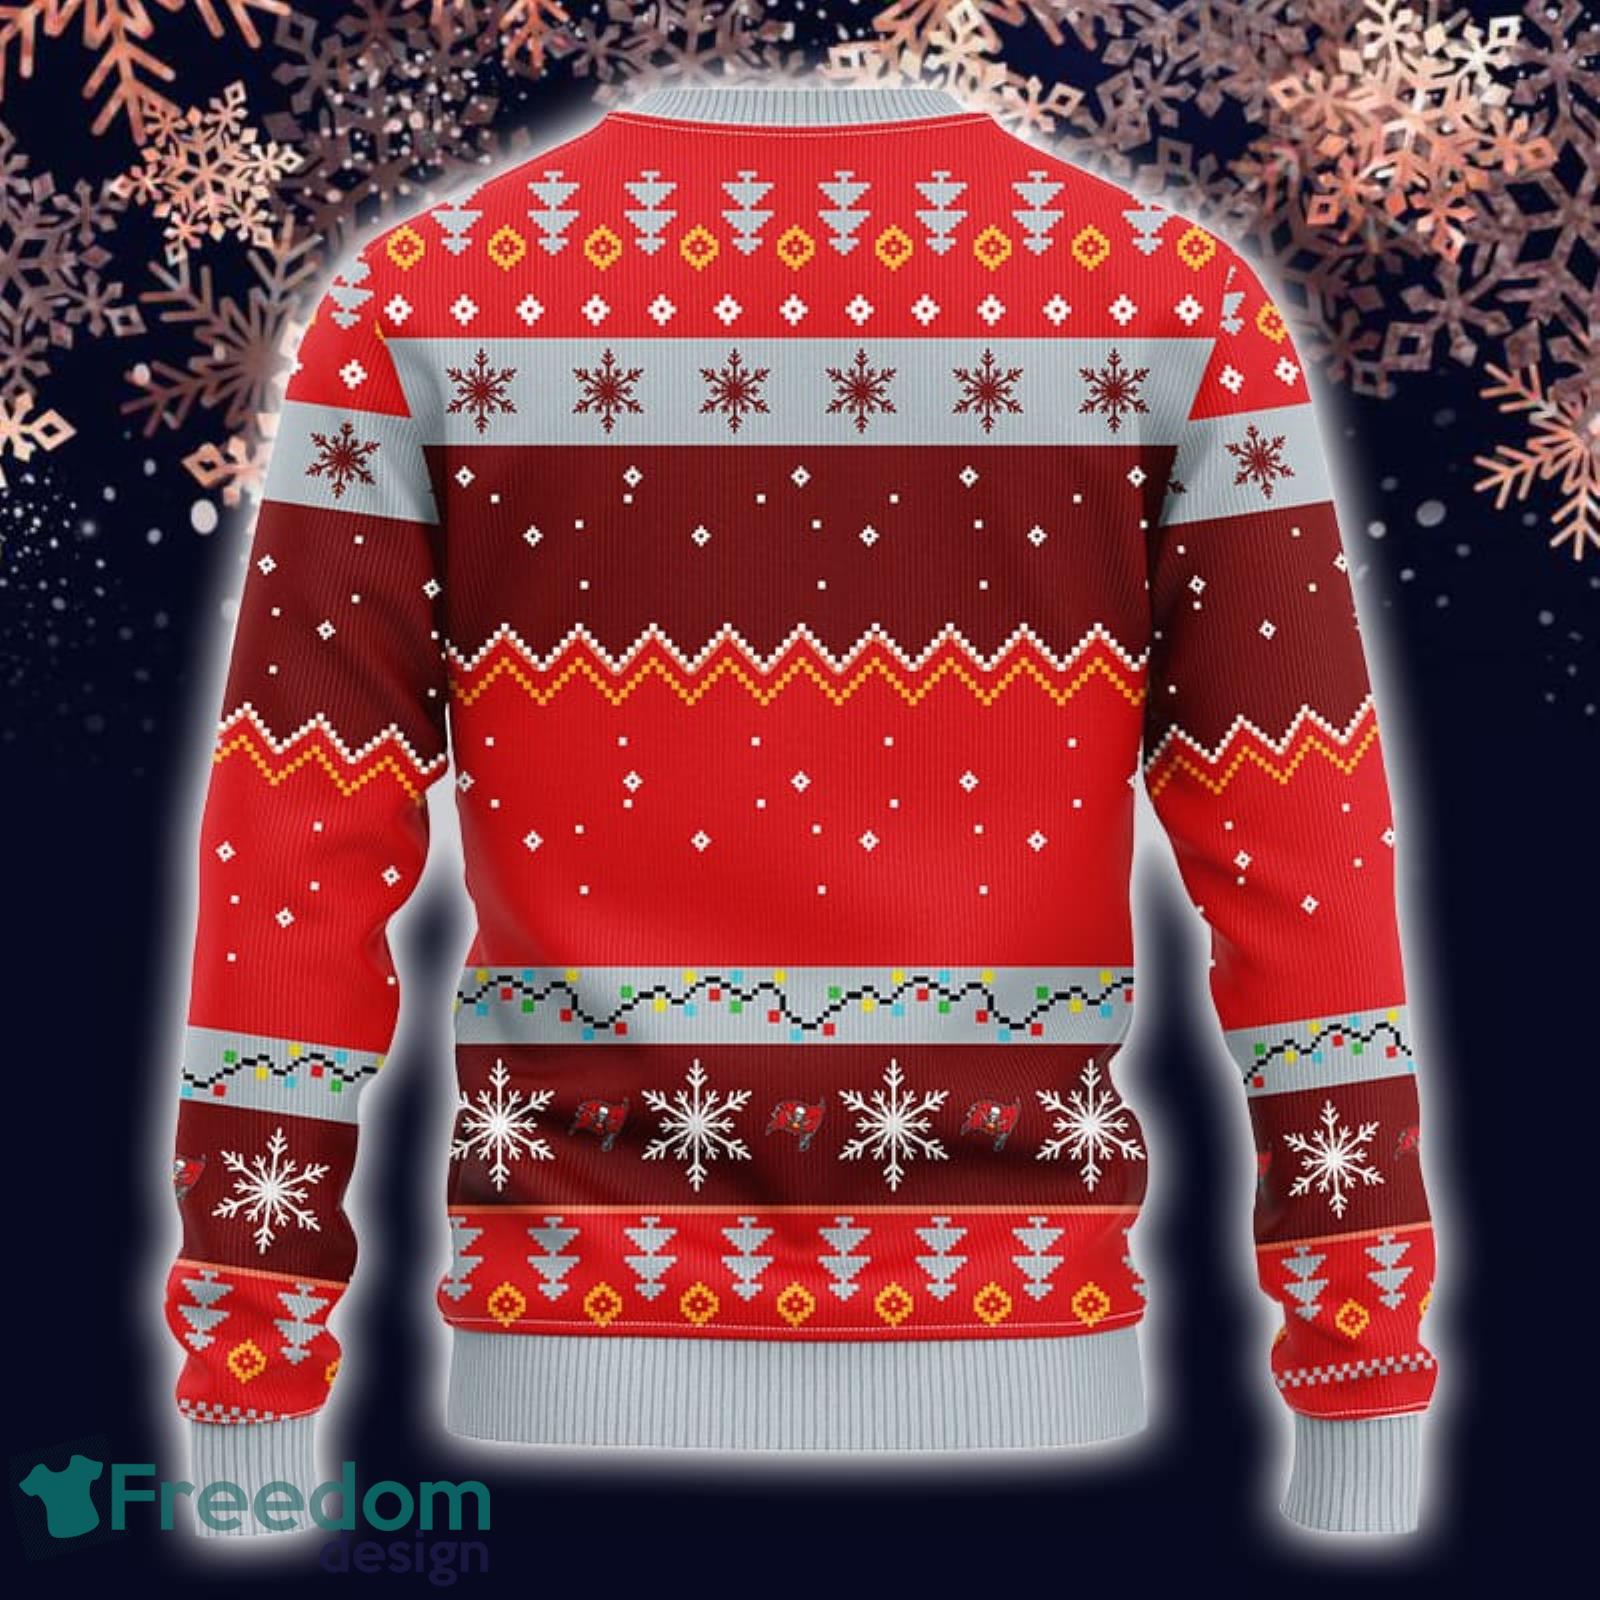 buccaneers christmas sweater